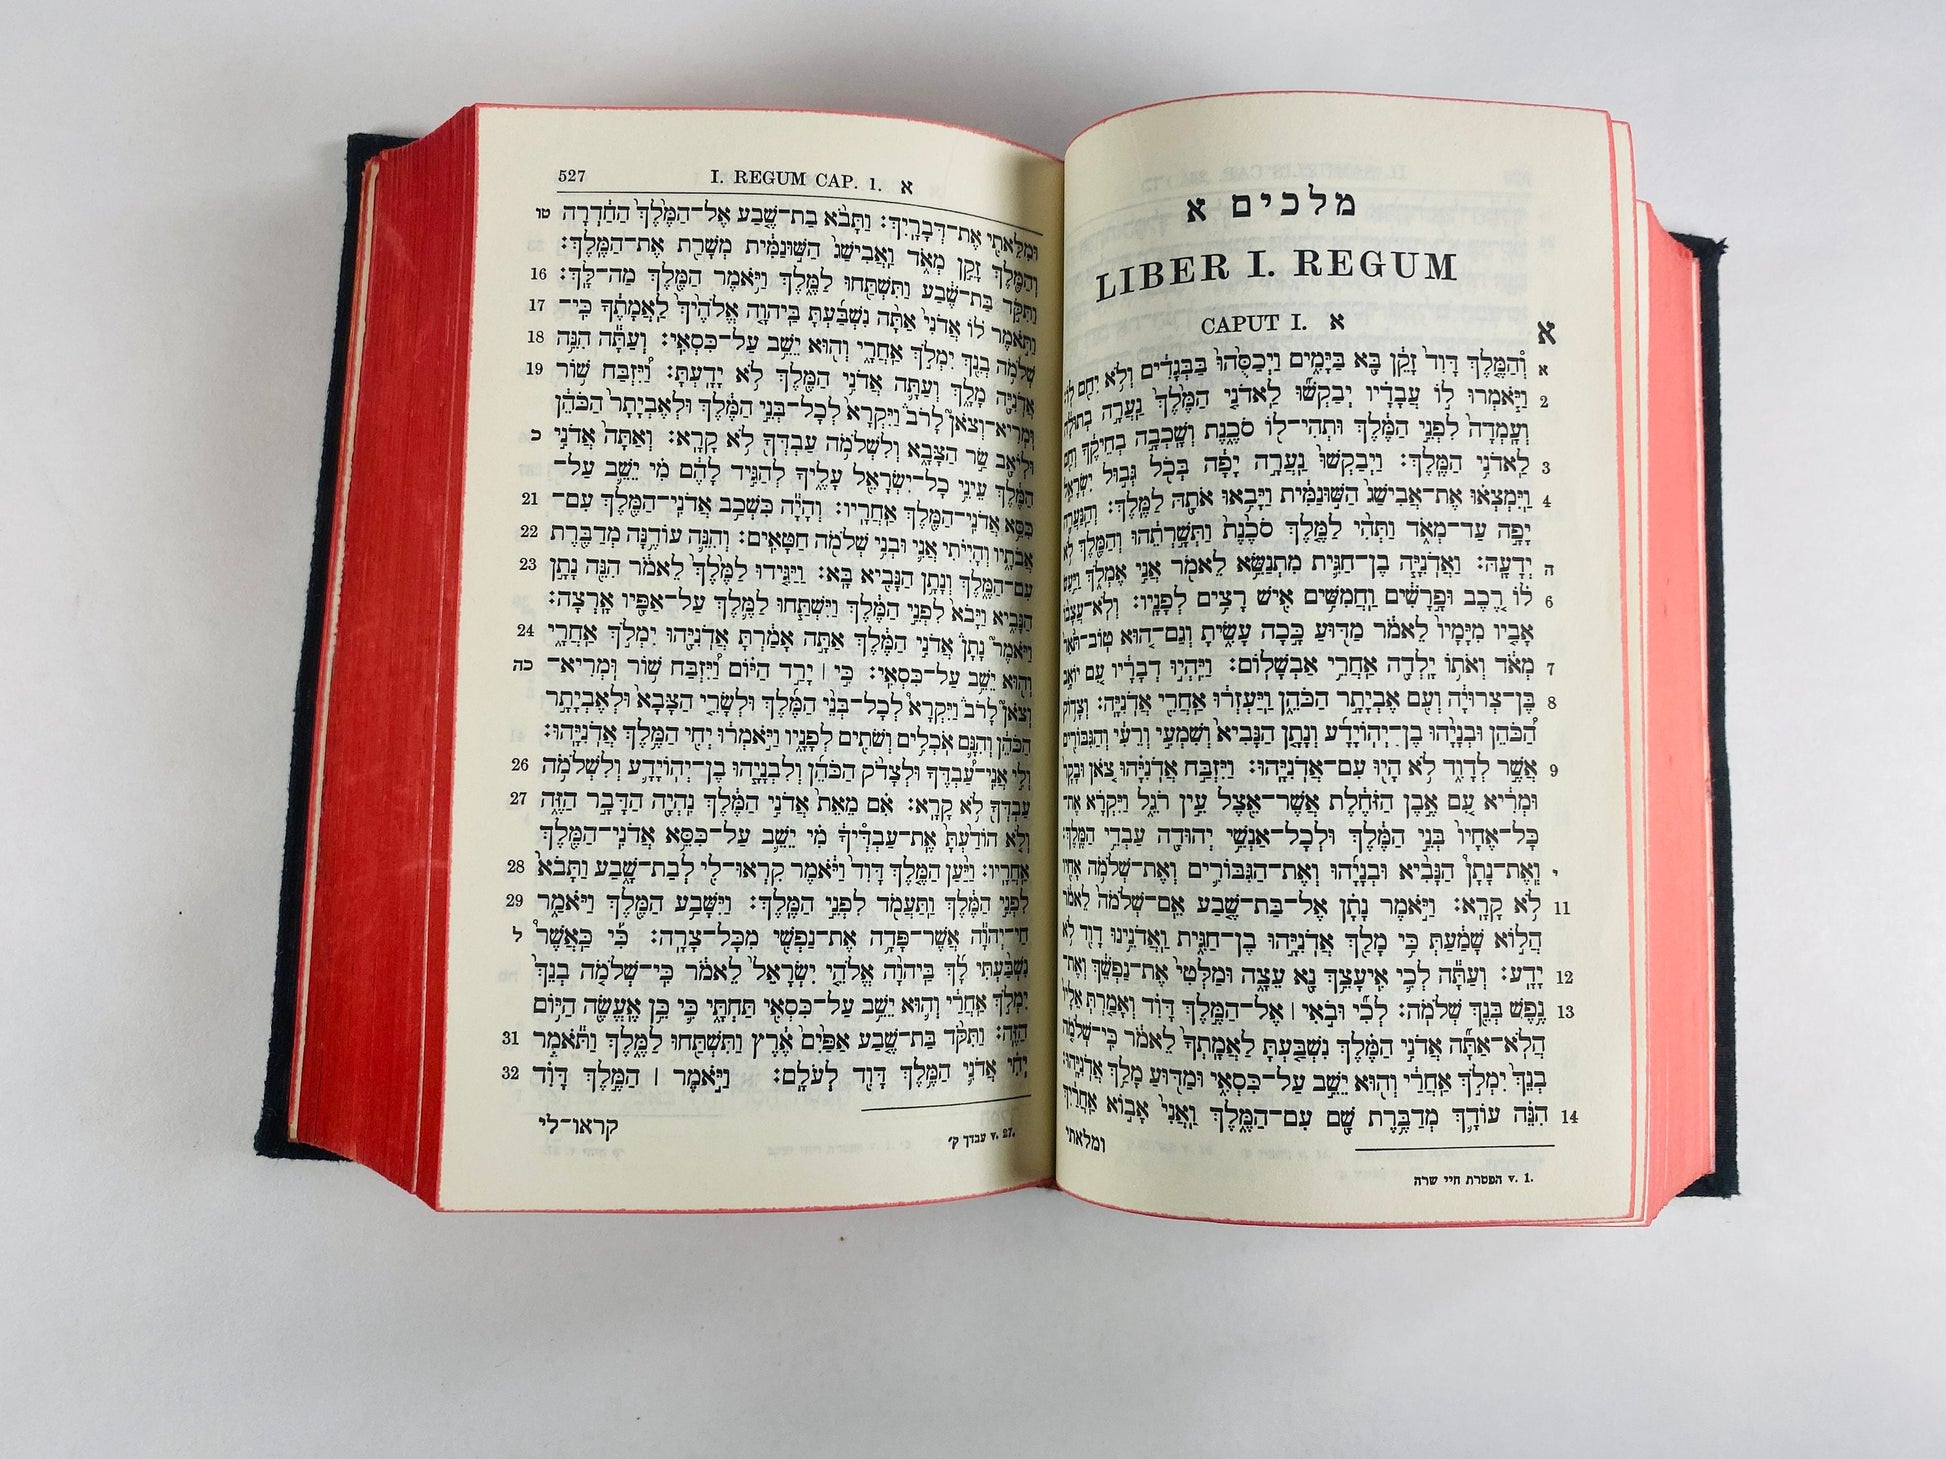 1962 Vintage British and Foreign Bible Society Israel Agency Pentateuch book Mishnah Judaica Hebraica Jewish Hebrew.